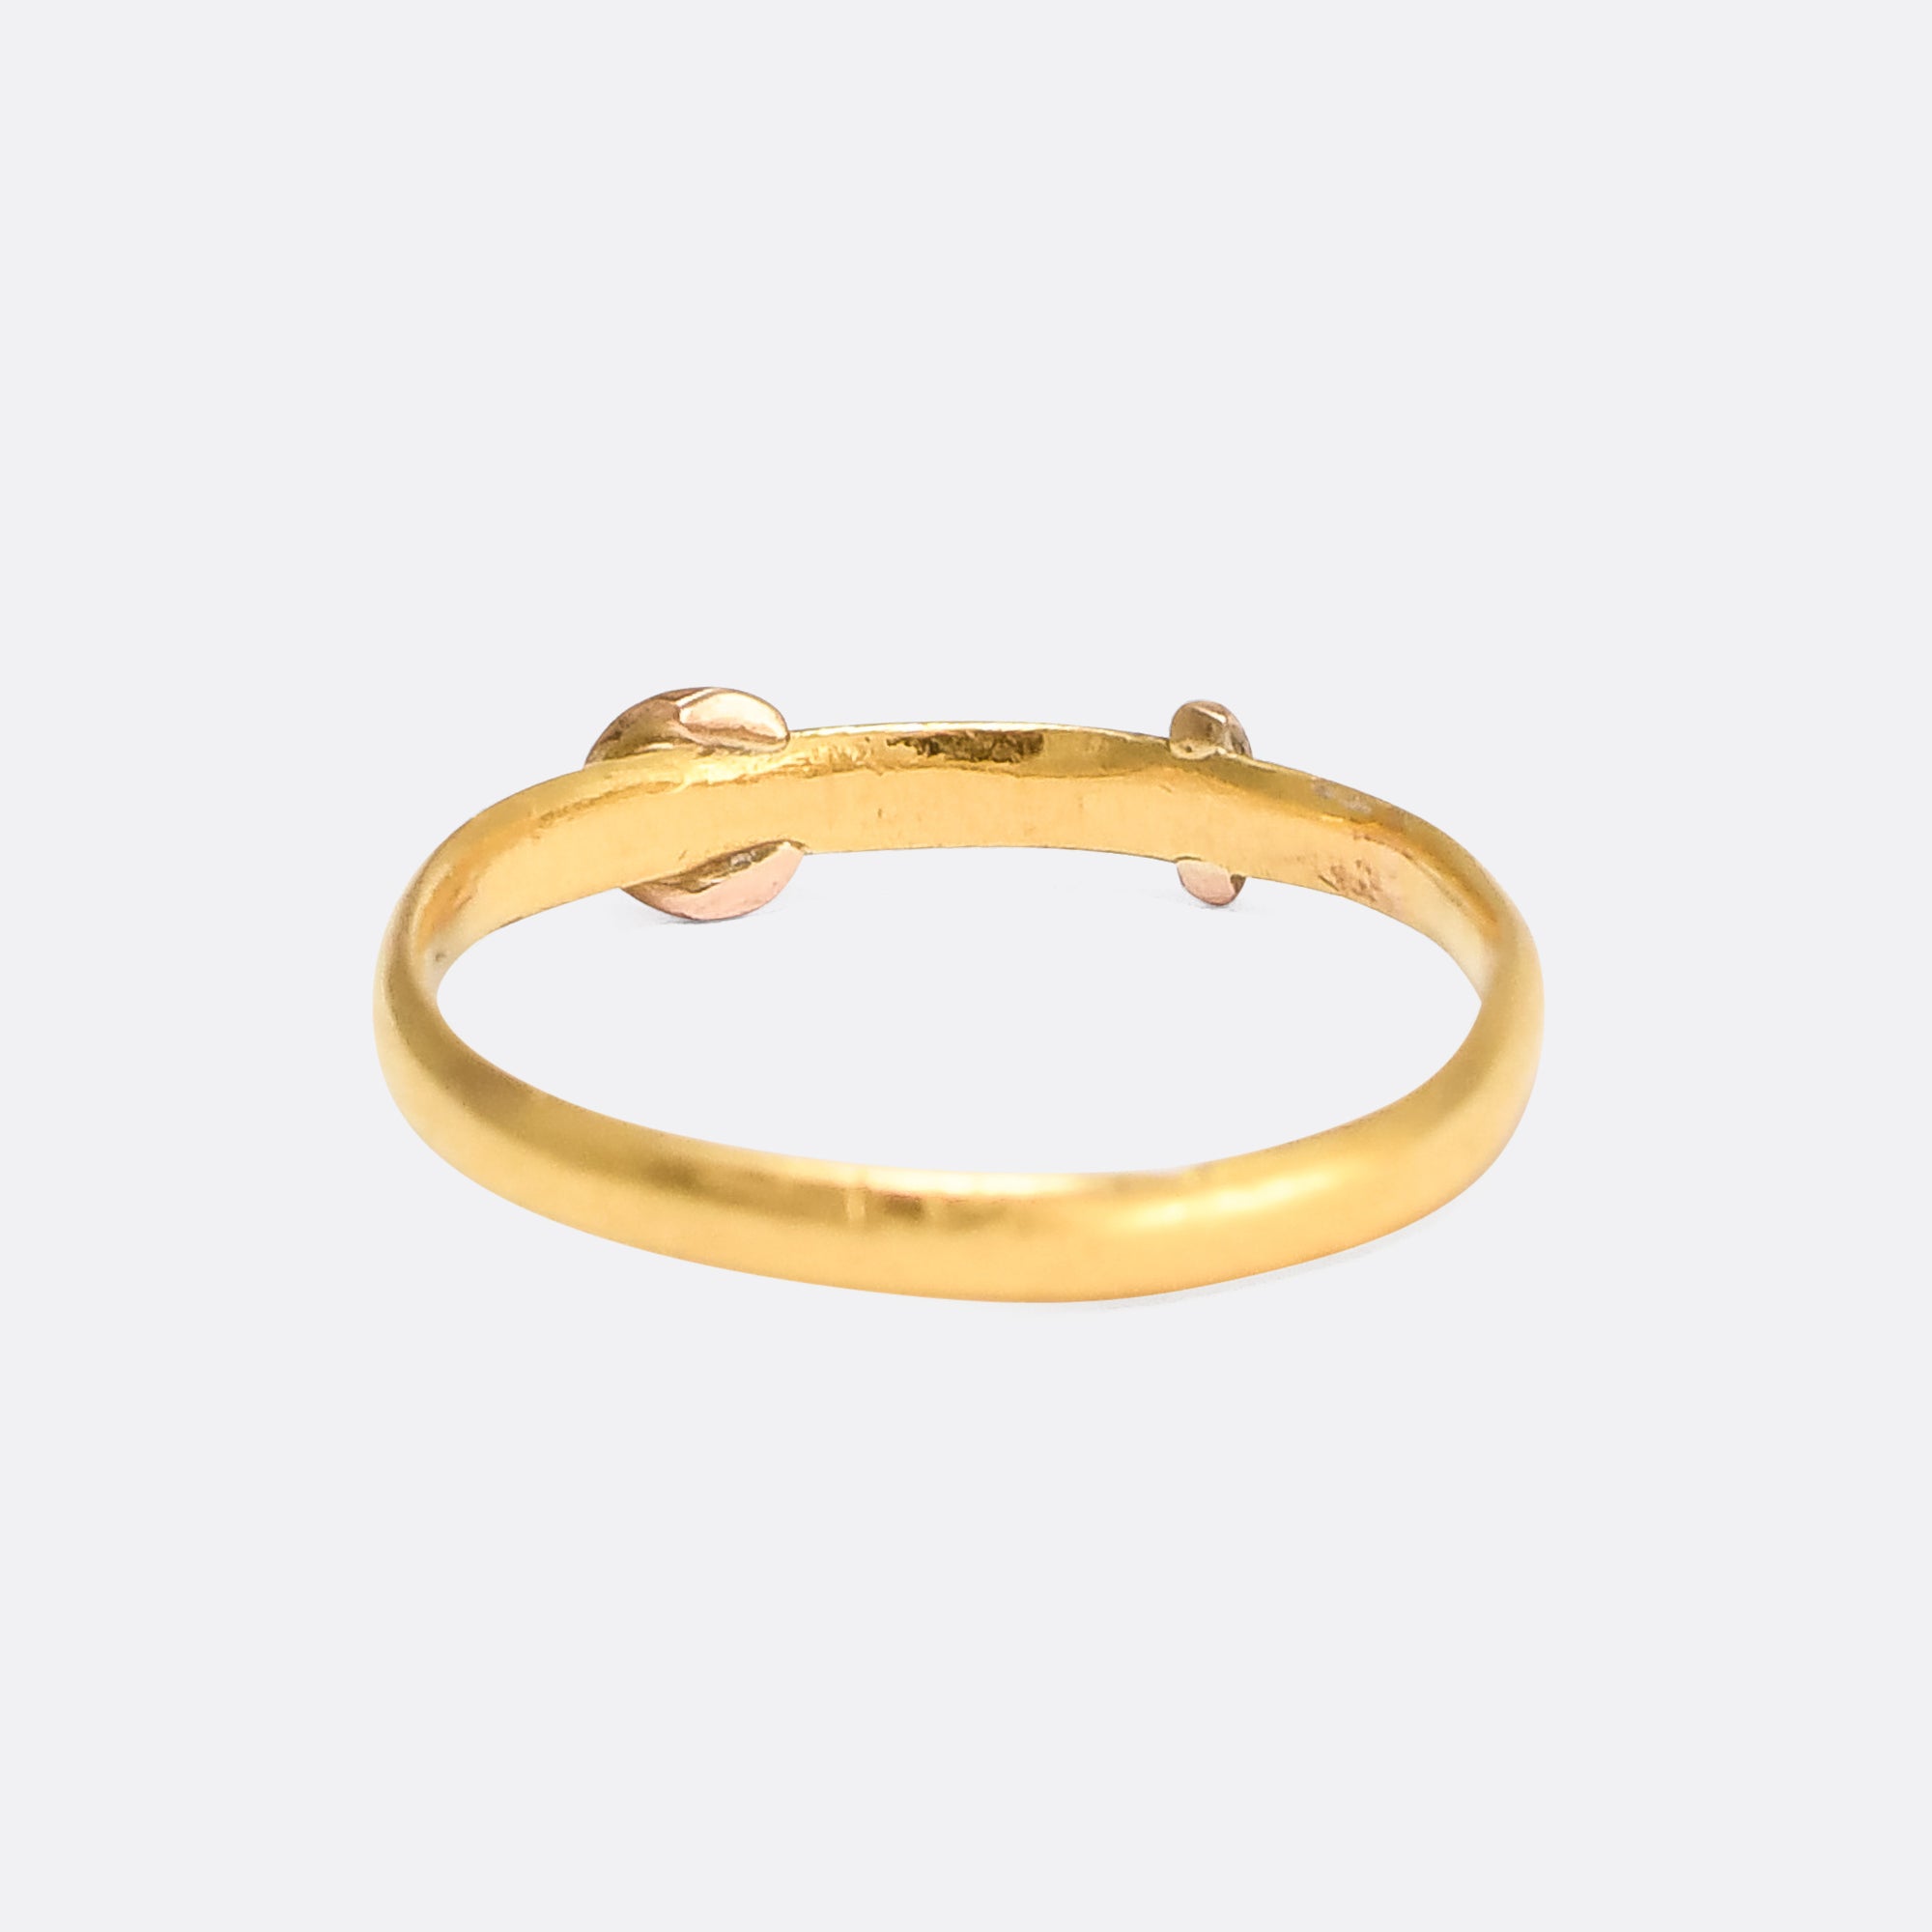 Senco Gold 22k (916) Yellow Gold Ring for Women : Amazon.in: Fashion